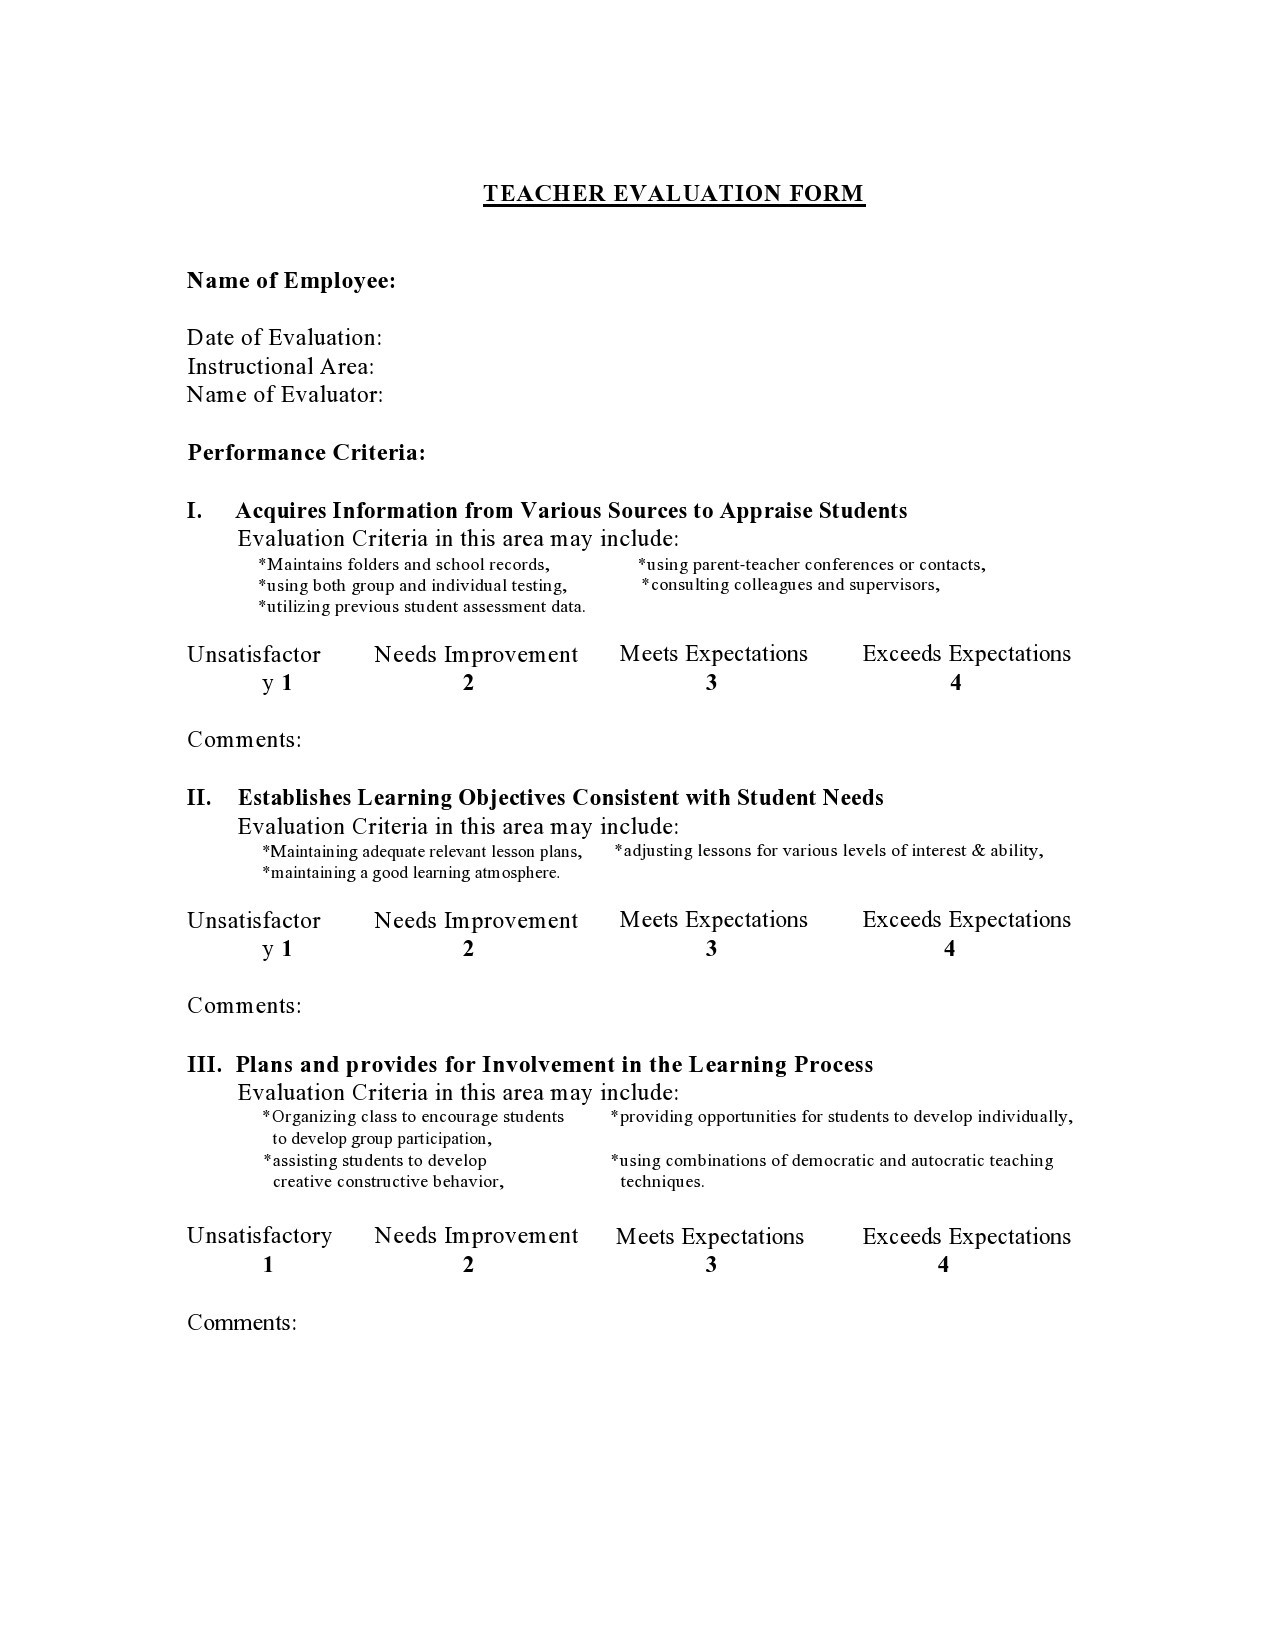 Free teacher evaluation form 02